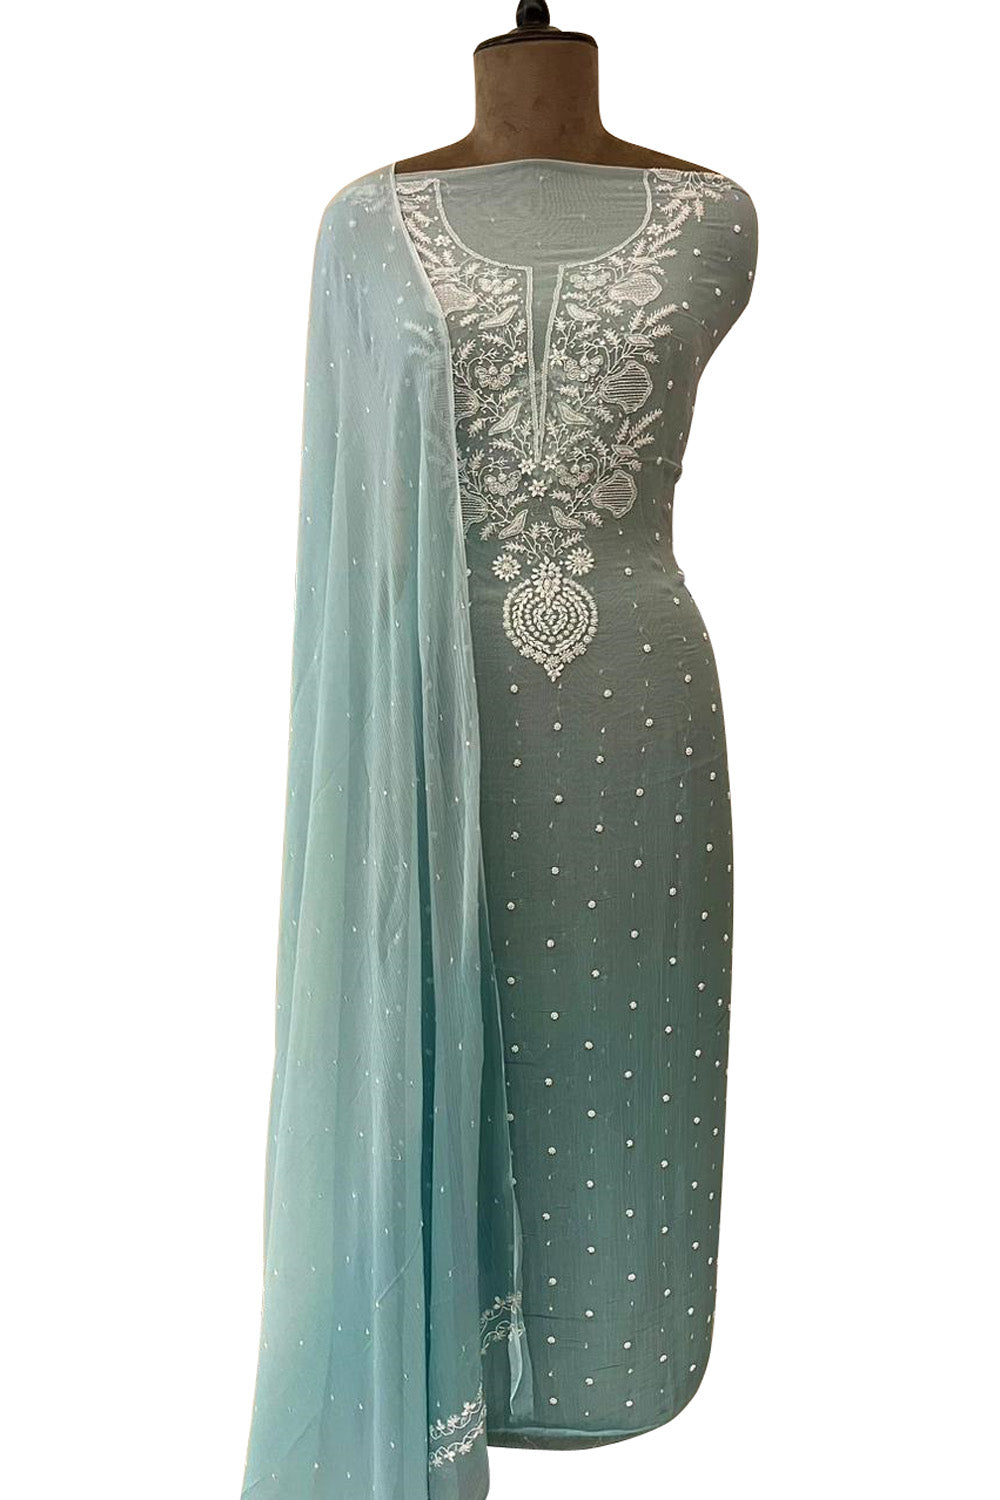 Stunning Blue Chikankari Chiffon Suit: Intricate Sequin & Pearl Embroidery - Luxurion World